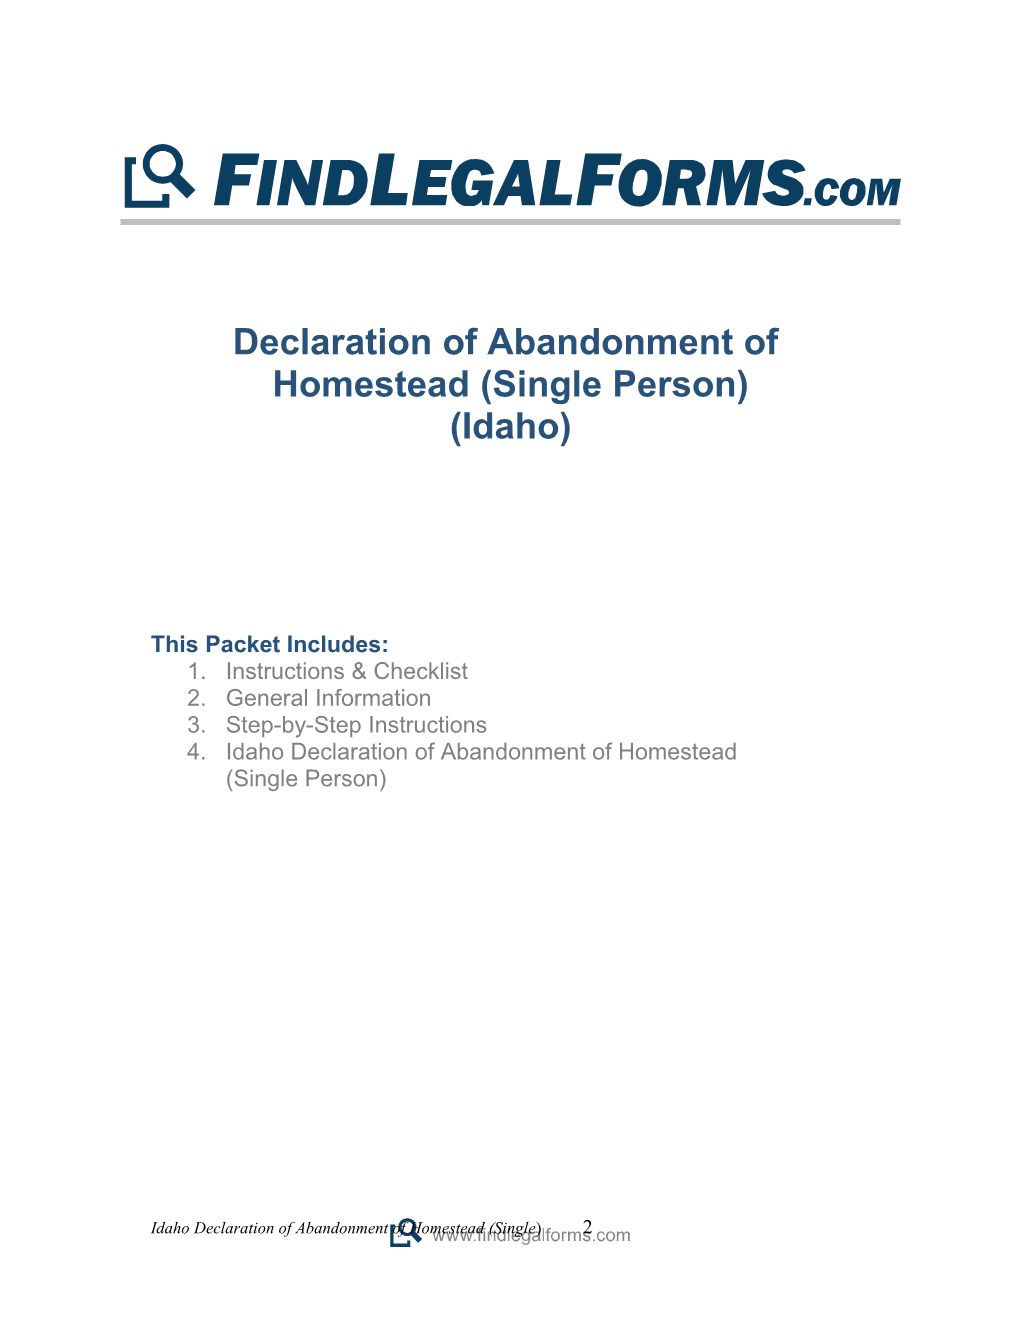 Declaration of Abandonment of Homestead (Single) (Idaho)